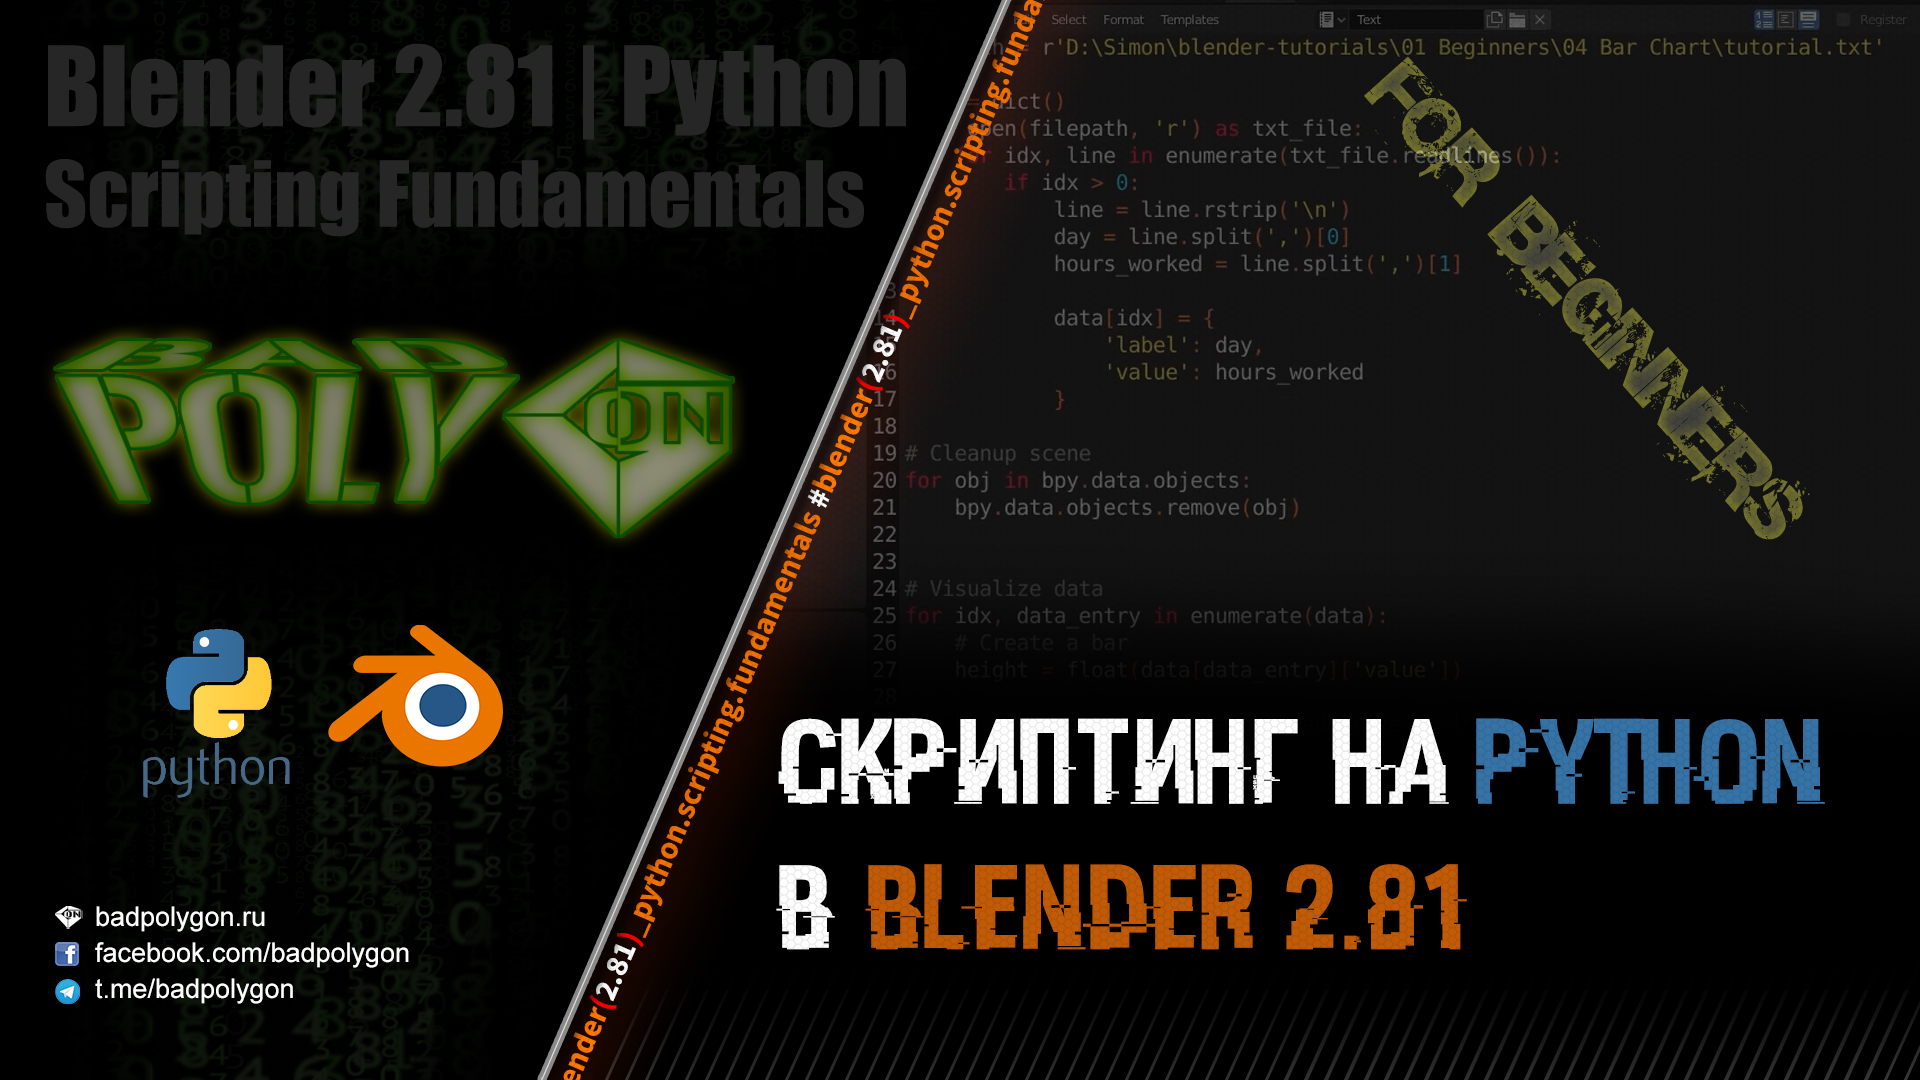 Blender 3d Python скриптинг. Фракталы и рандомизация на Python. Blender python scripting